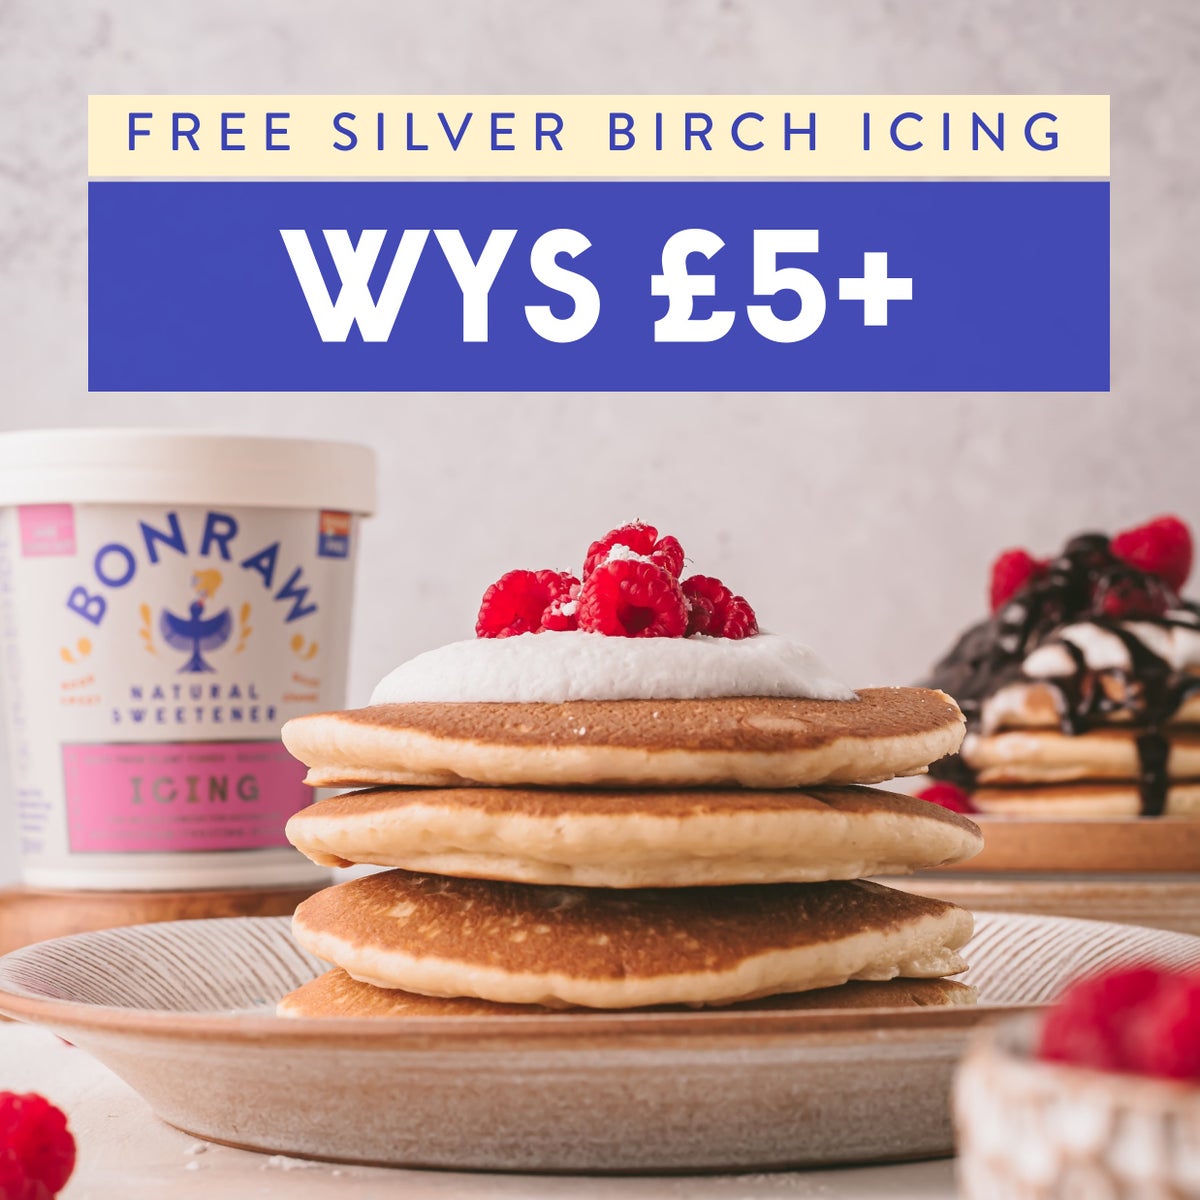 Free Silver Birch Icing WYS +£5